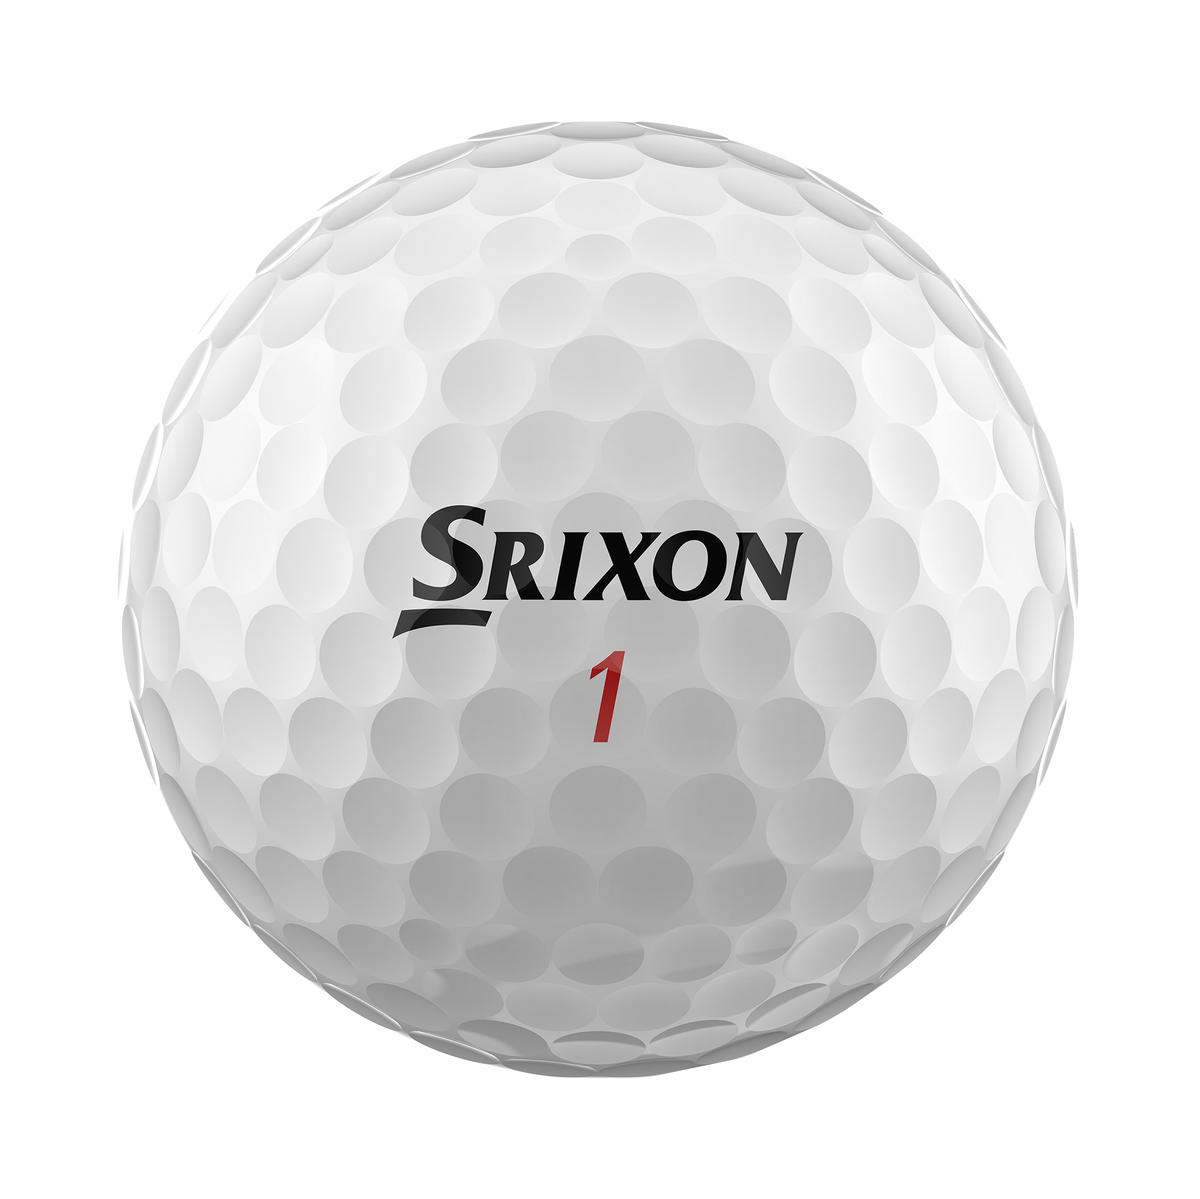 Srixon Z-STAR XV 8 2023 Golf Balls